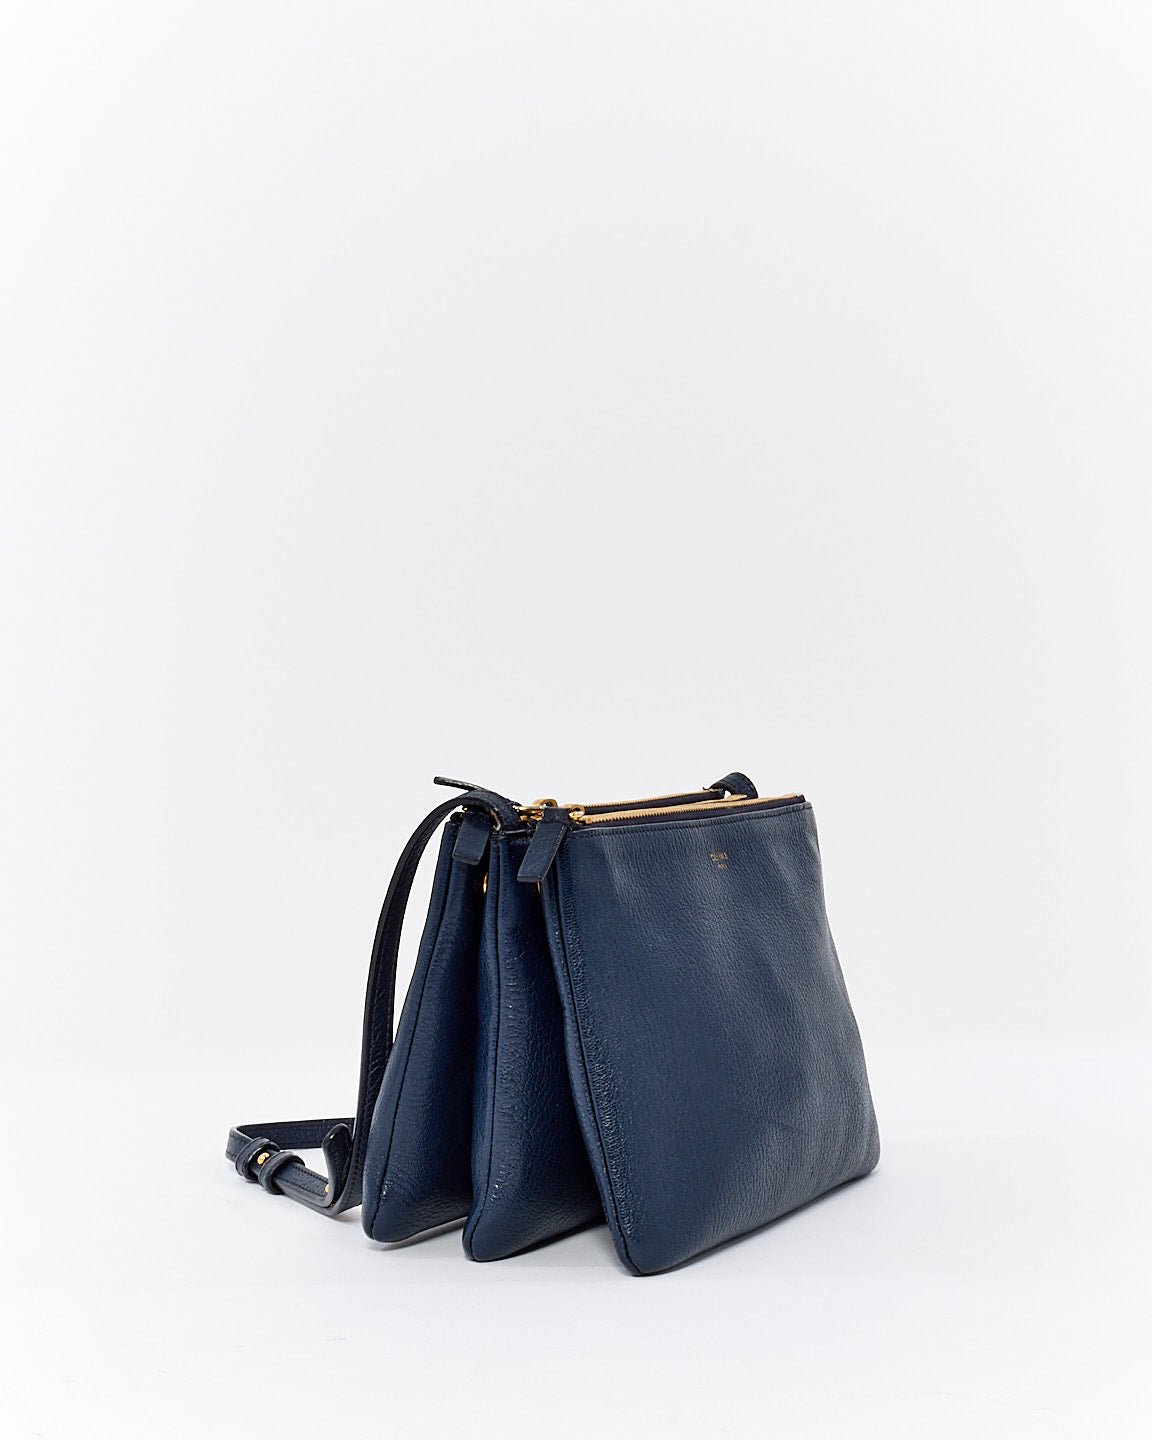 Celine Navy Blue Leather Small Trio Crossbody Bag